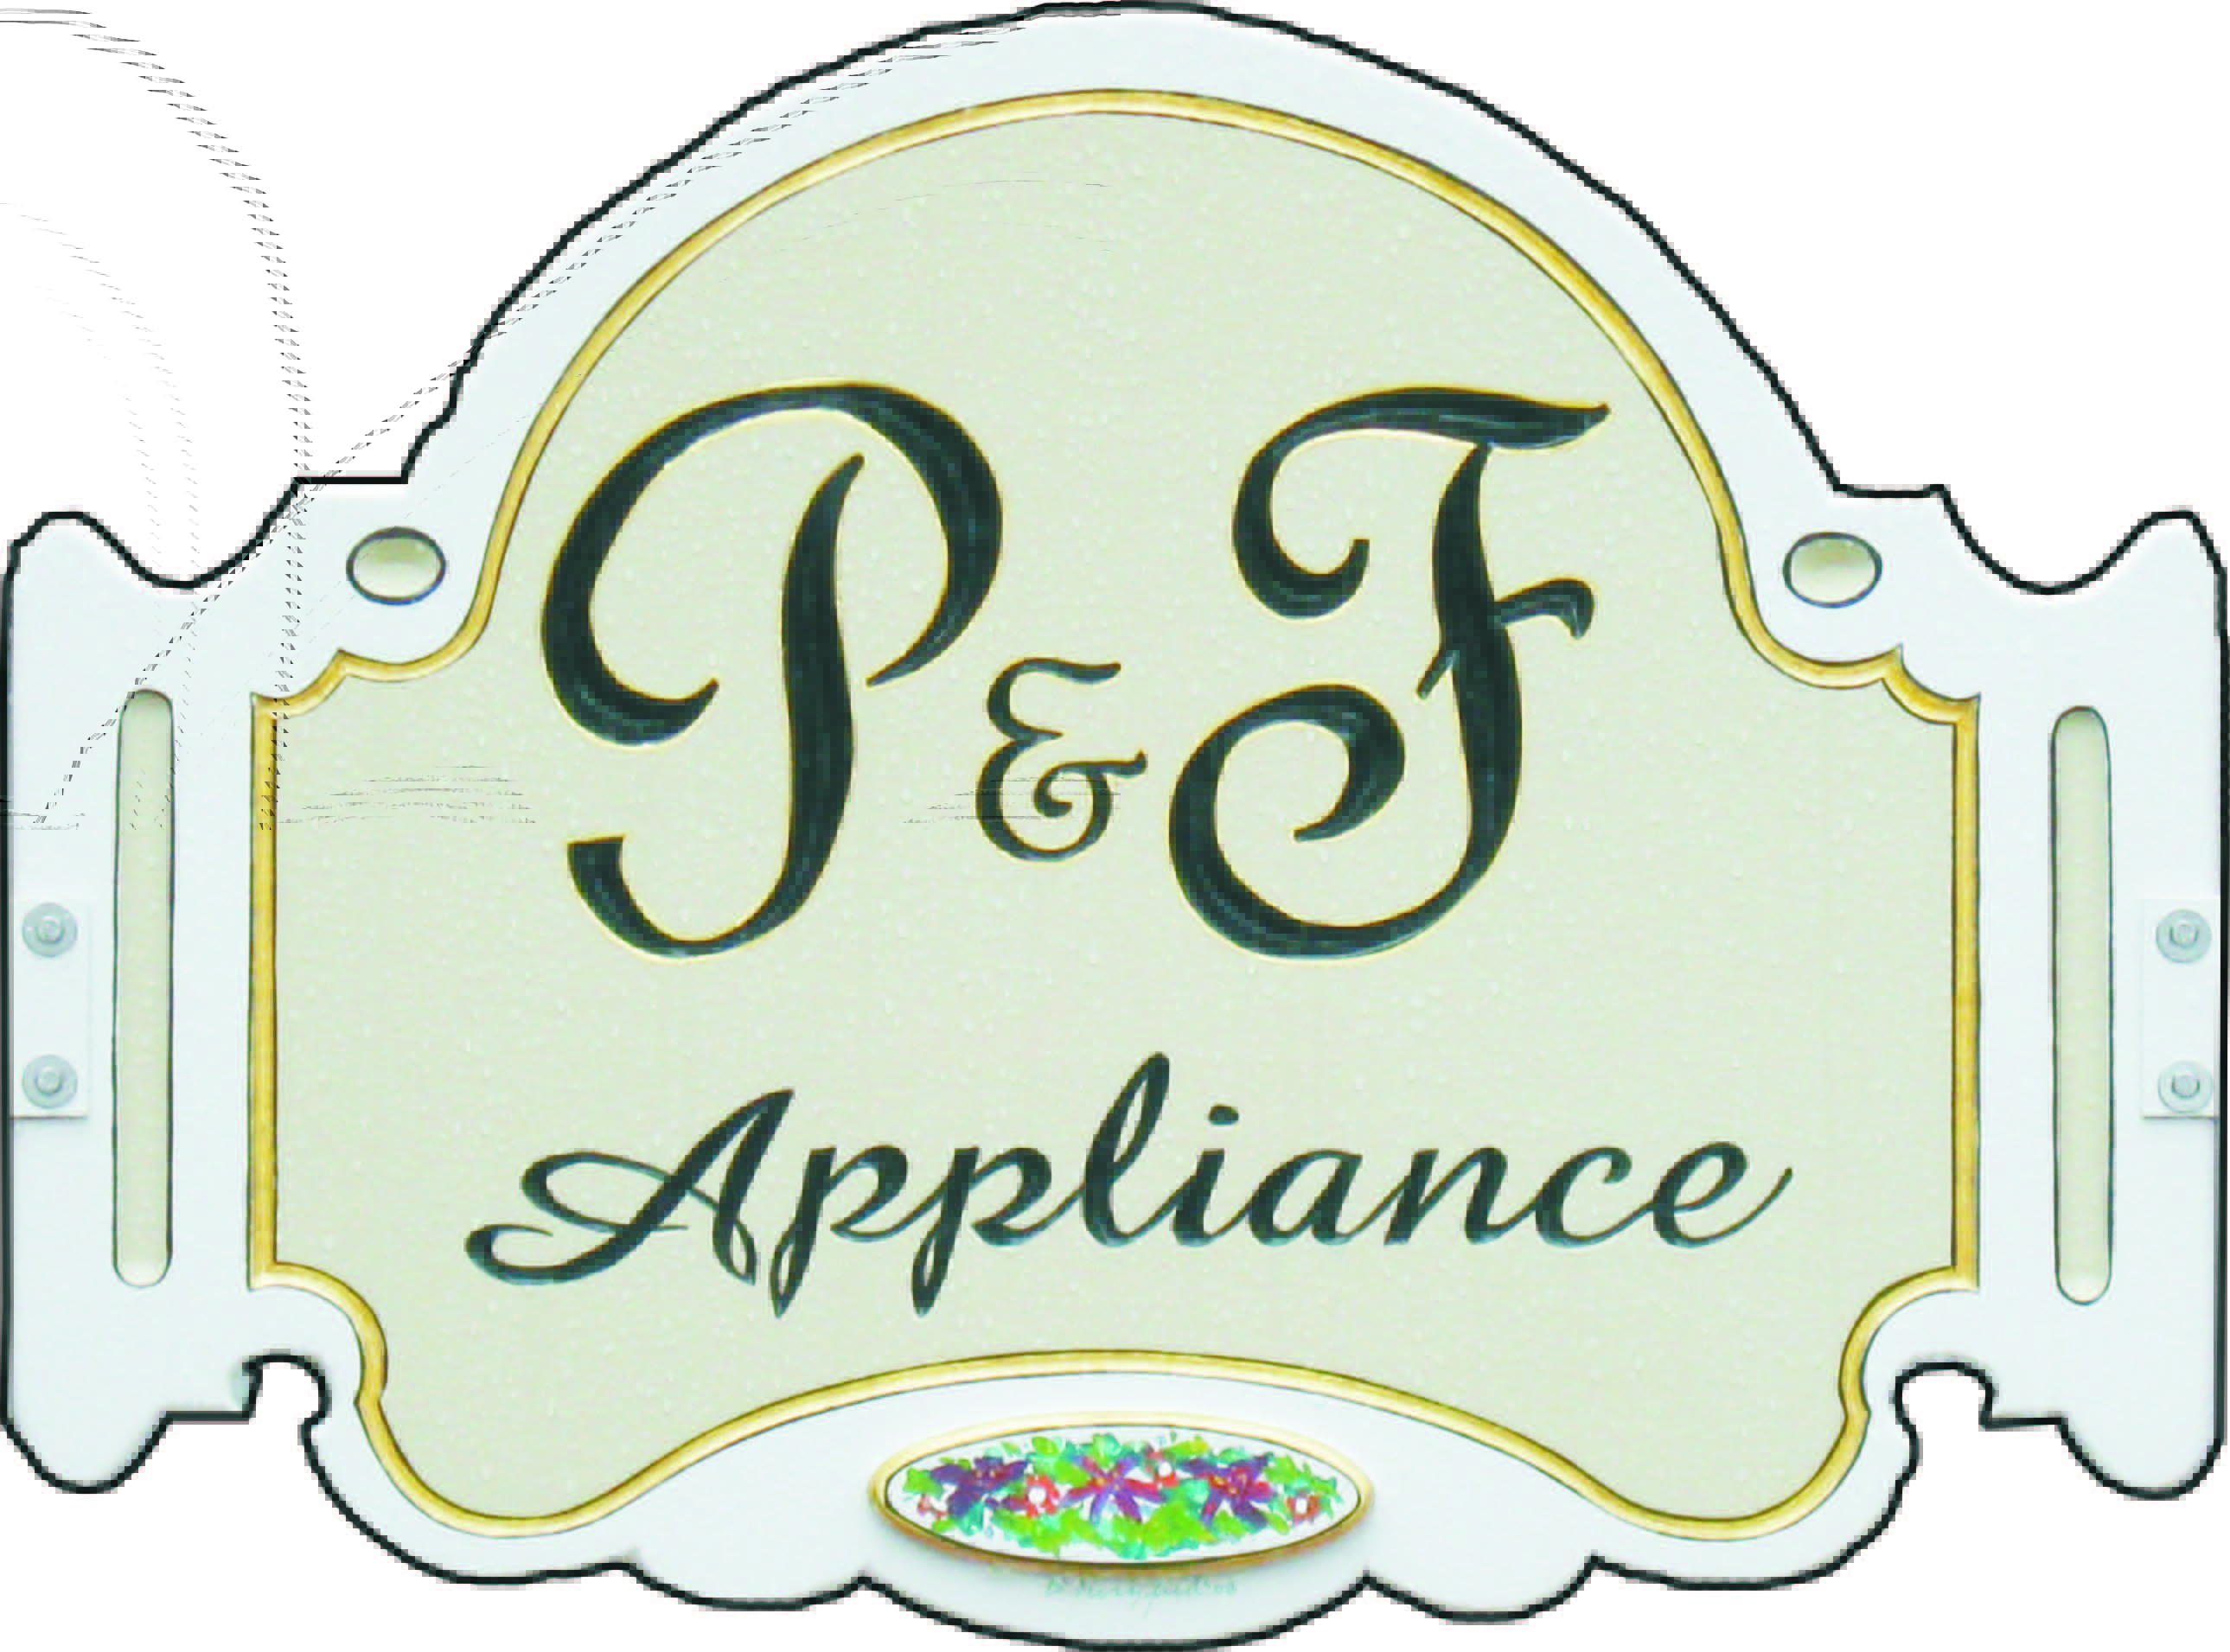 P&F logo